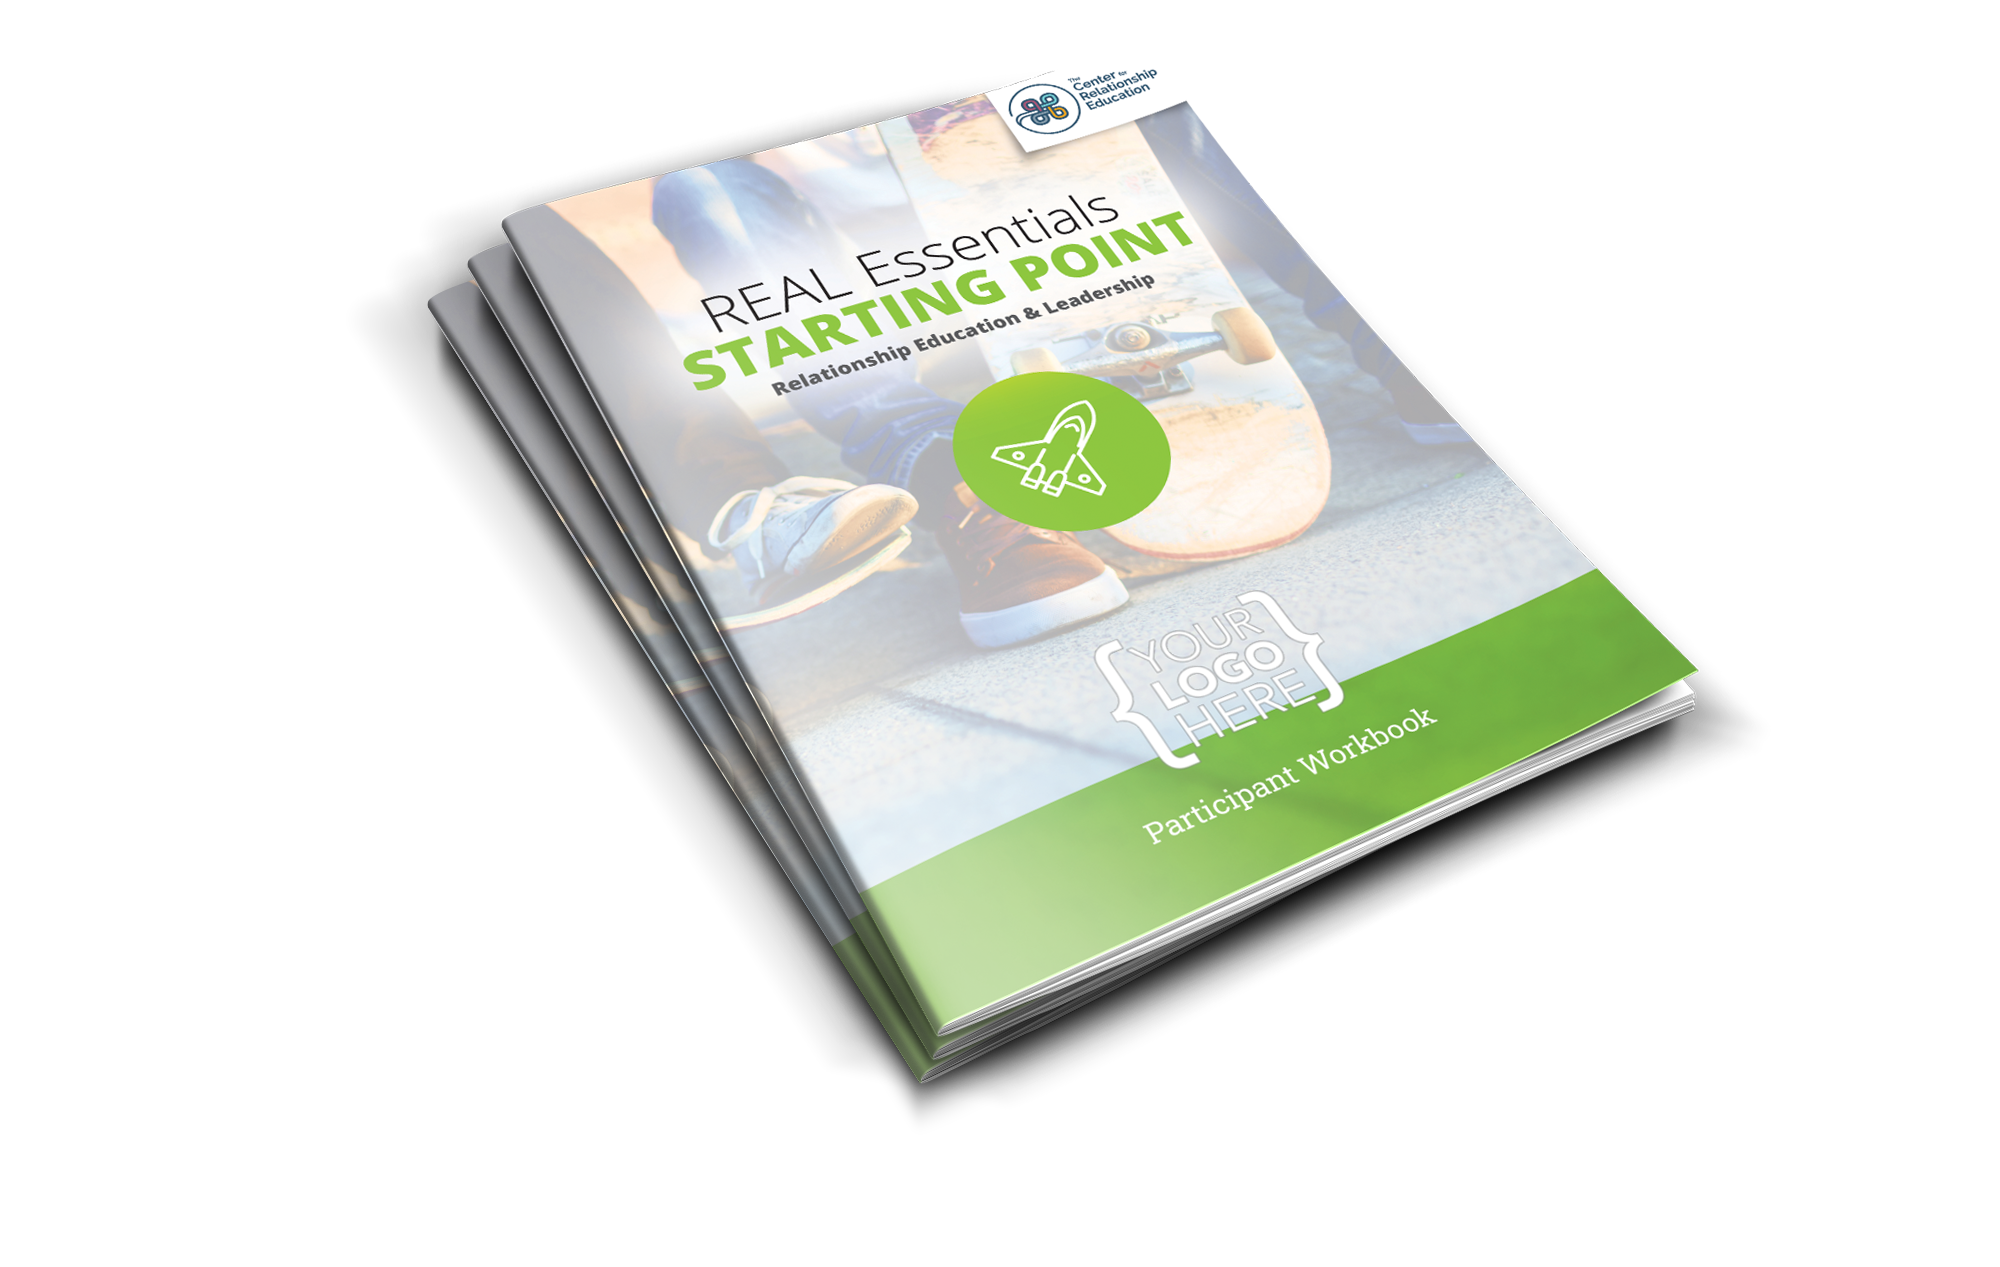 REAL Essentials Starting Point Custom Workbook Licensing Agreement